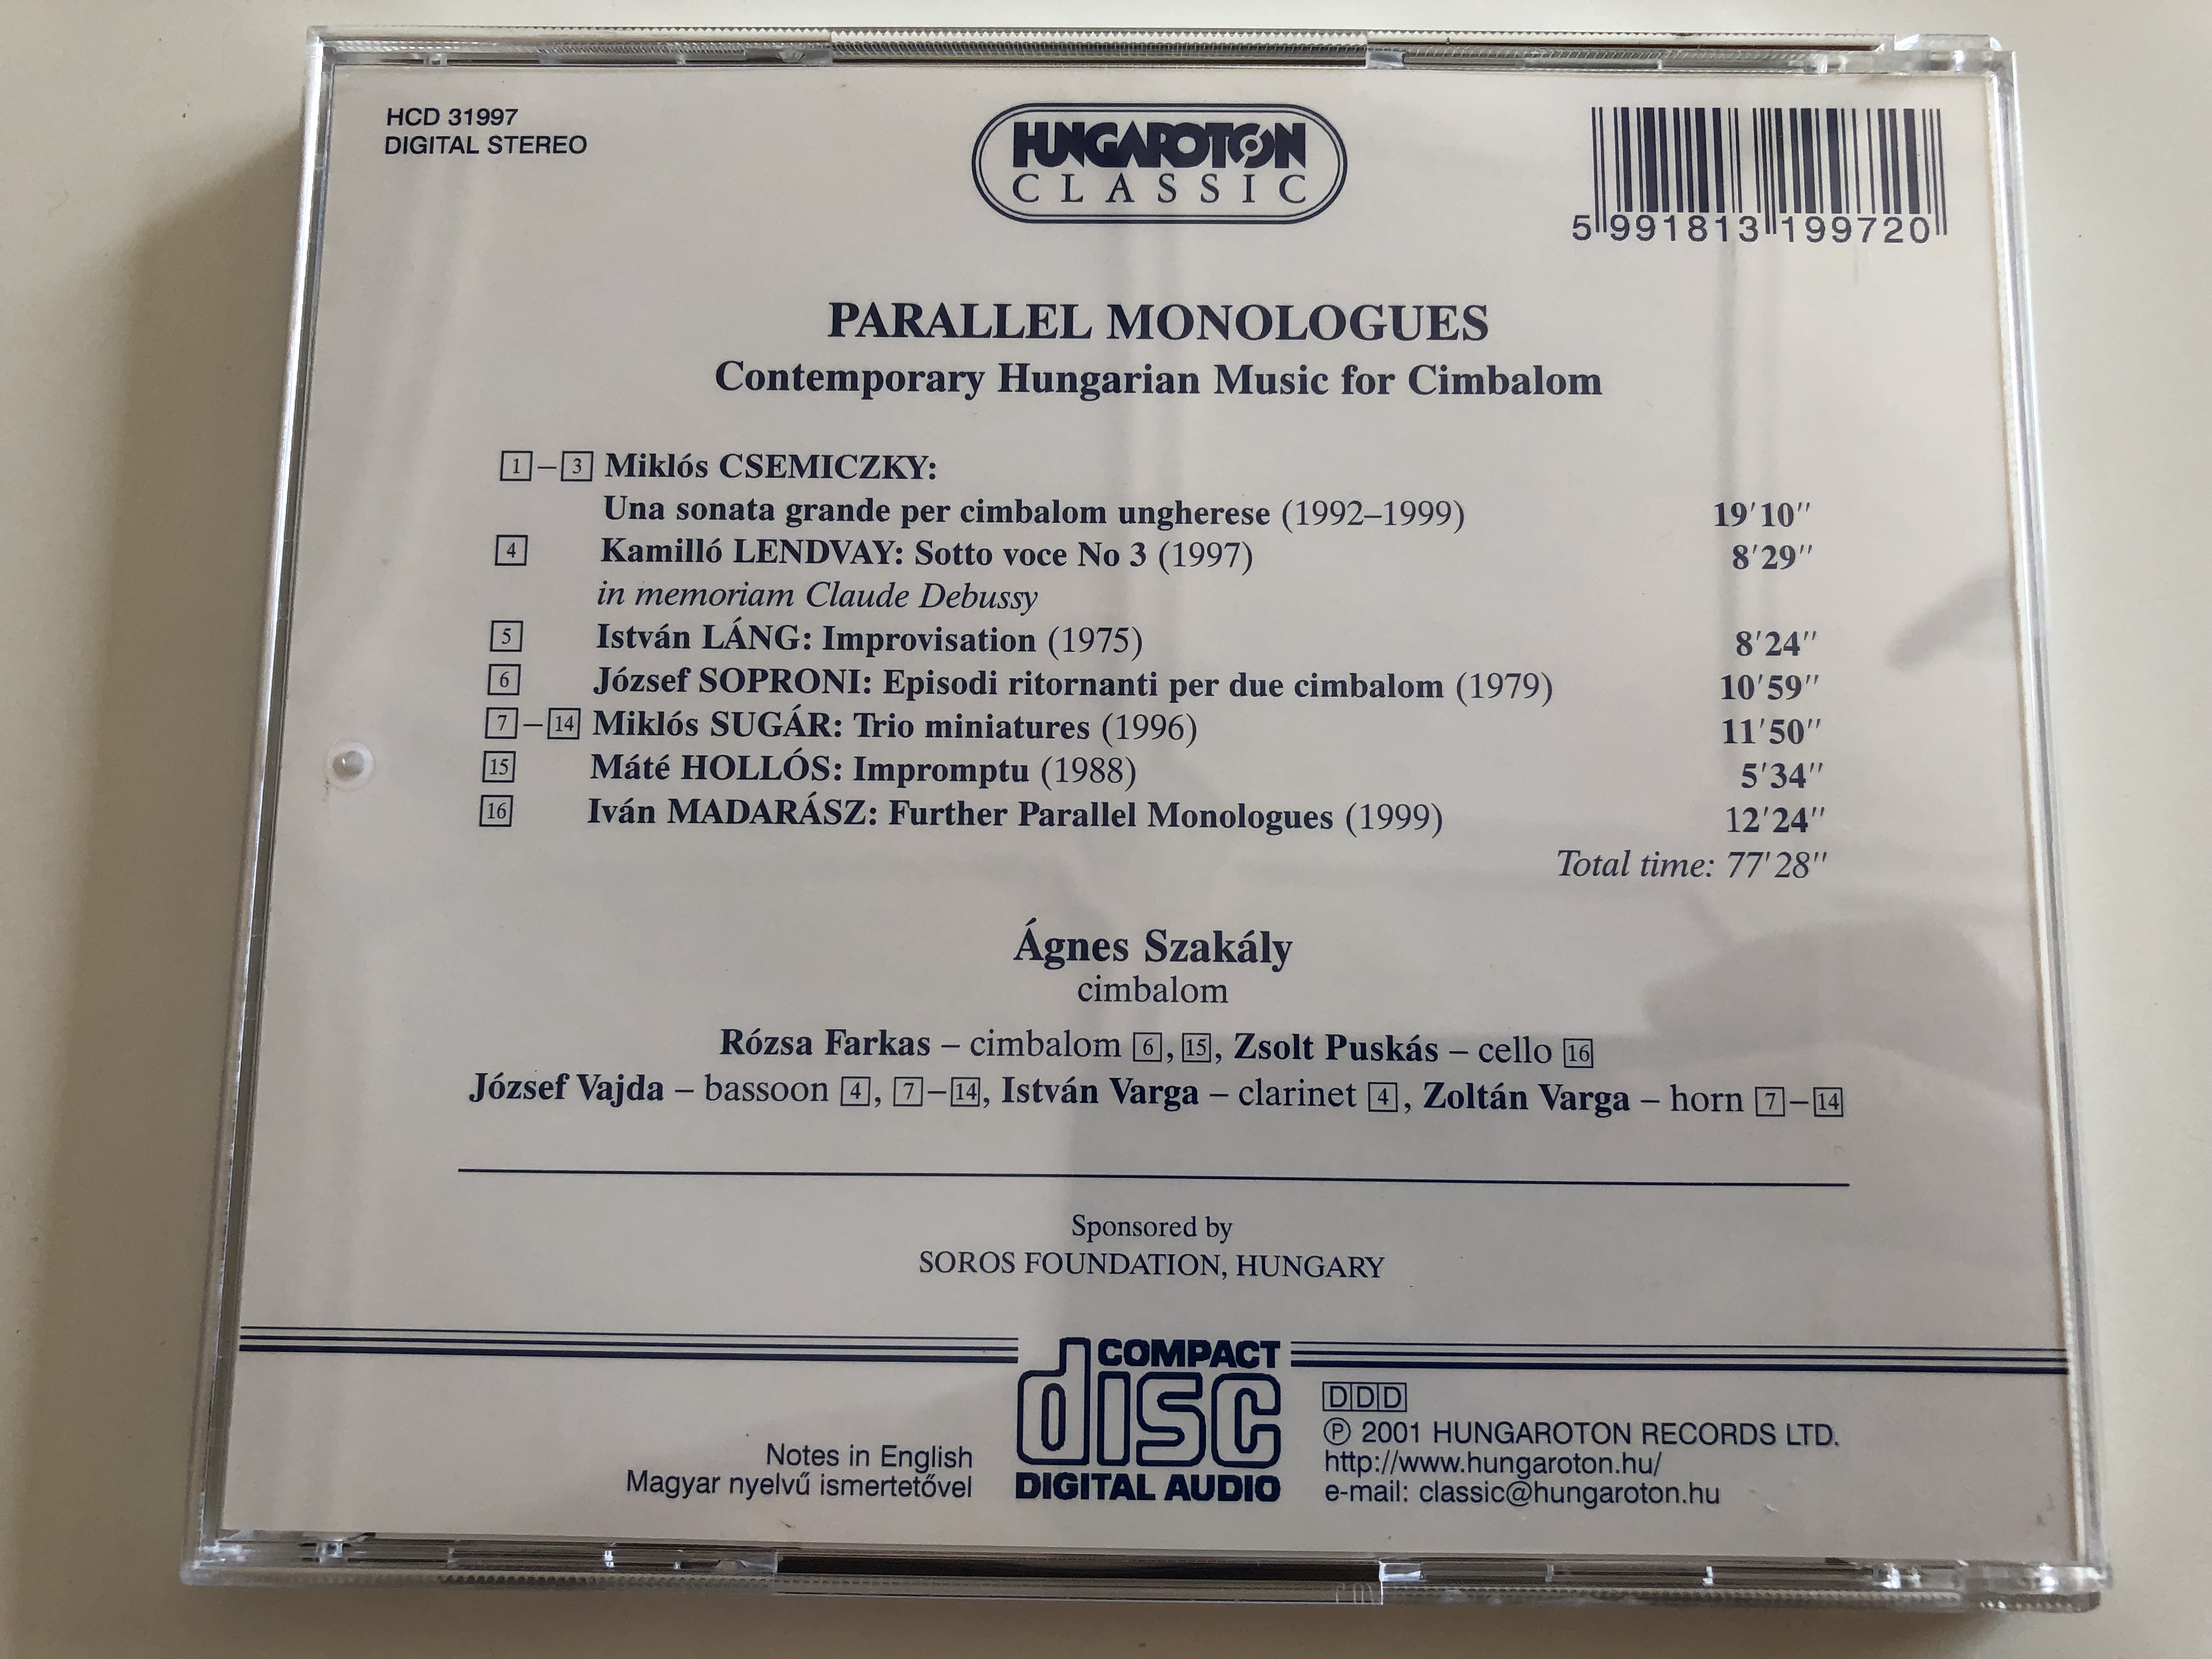 parallel-monologues-contemporary-hungarian-music-for-cimbalom-dulcimer-gnes-szak-ly-csemiczky-lendvay-l-ng-soproni-m.-sug-r-holl-s-madar-sz-hungaroton-classic-audio-cd-2001-hcd-31997-8-.jpg